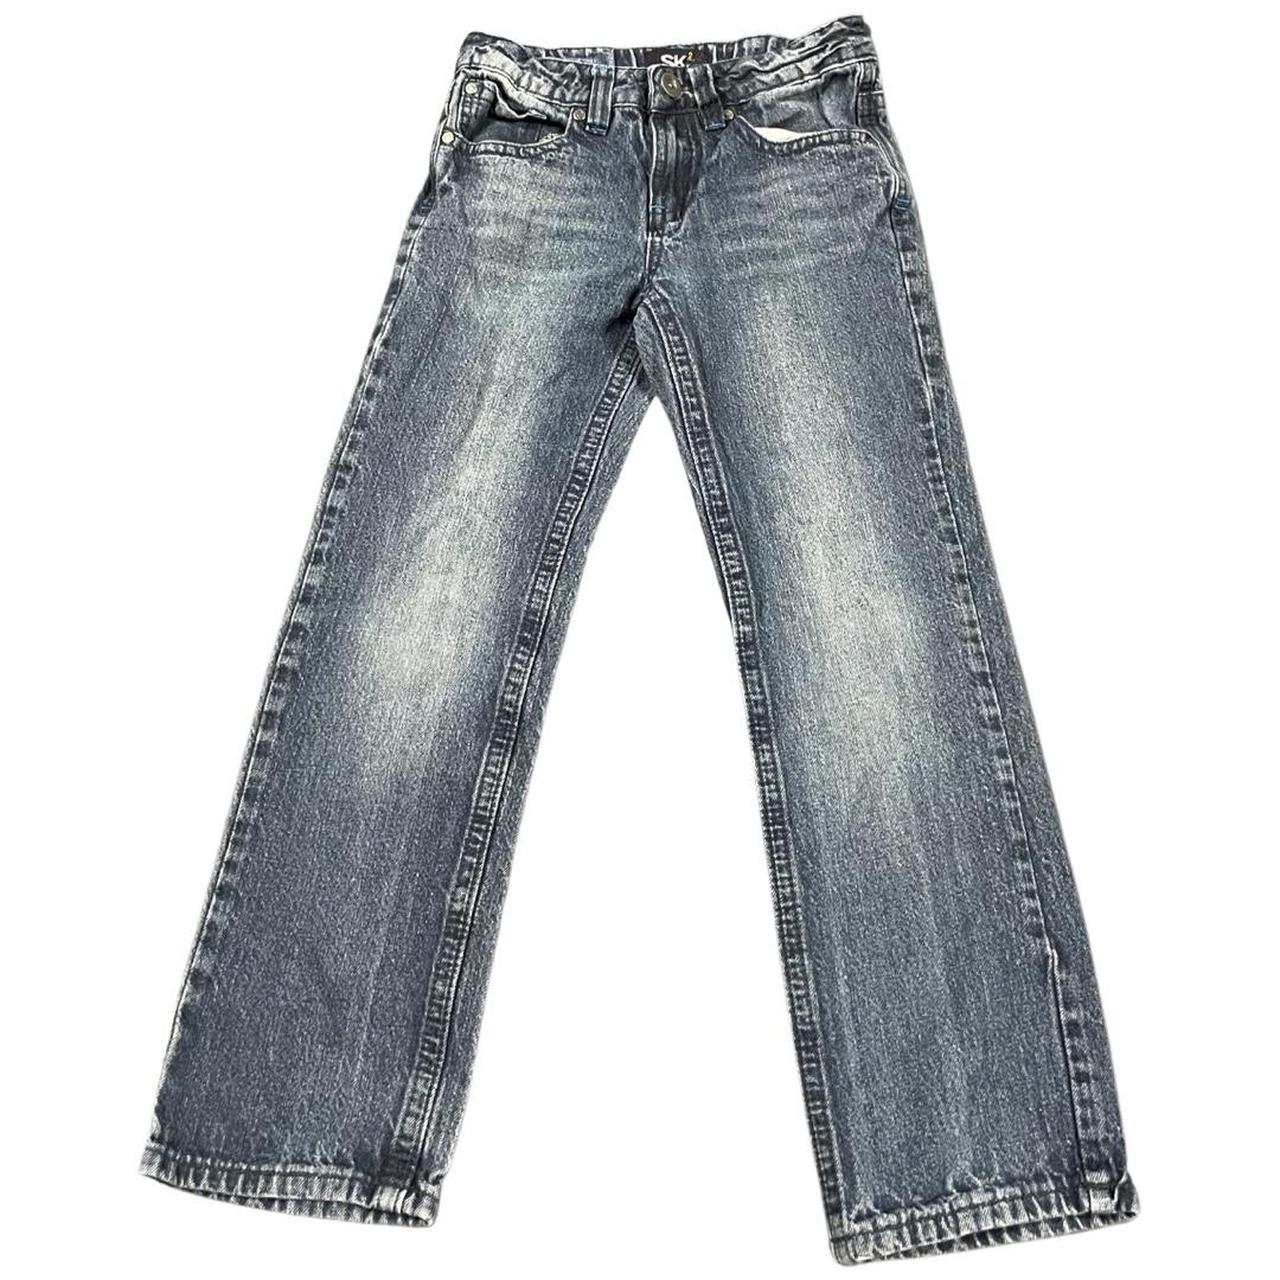 cybery2k jeans ☠︎ alt alternative emo goth... - Depop